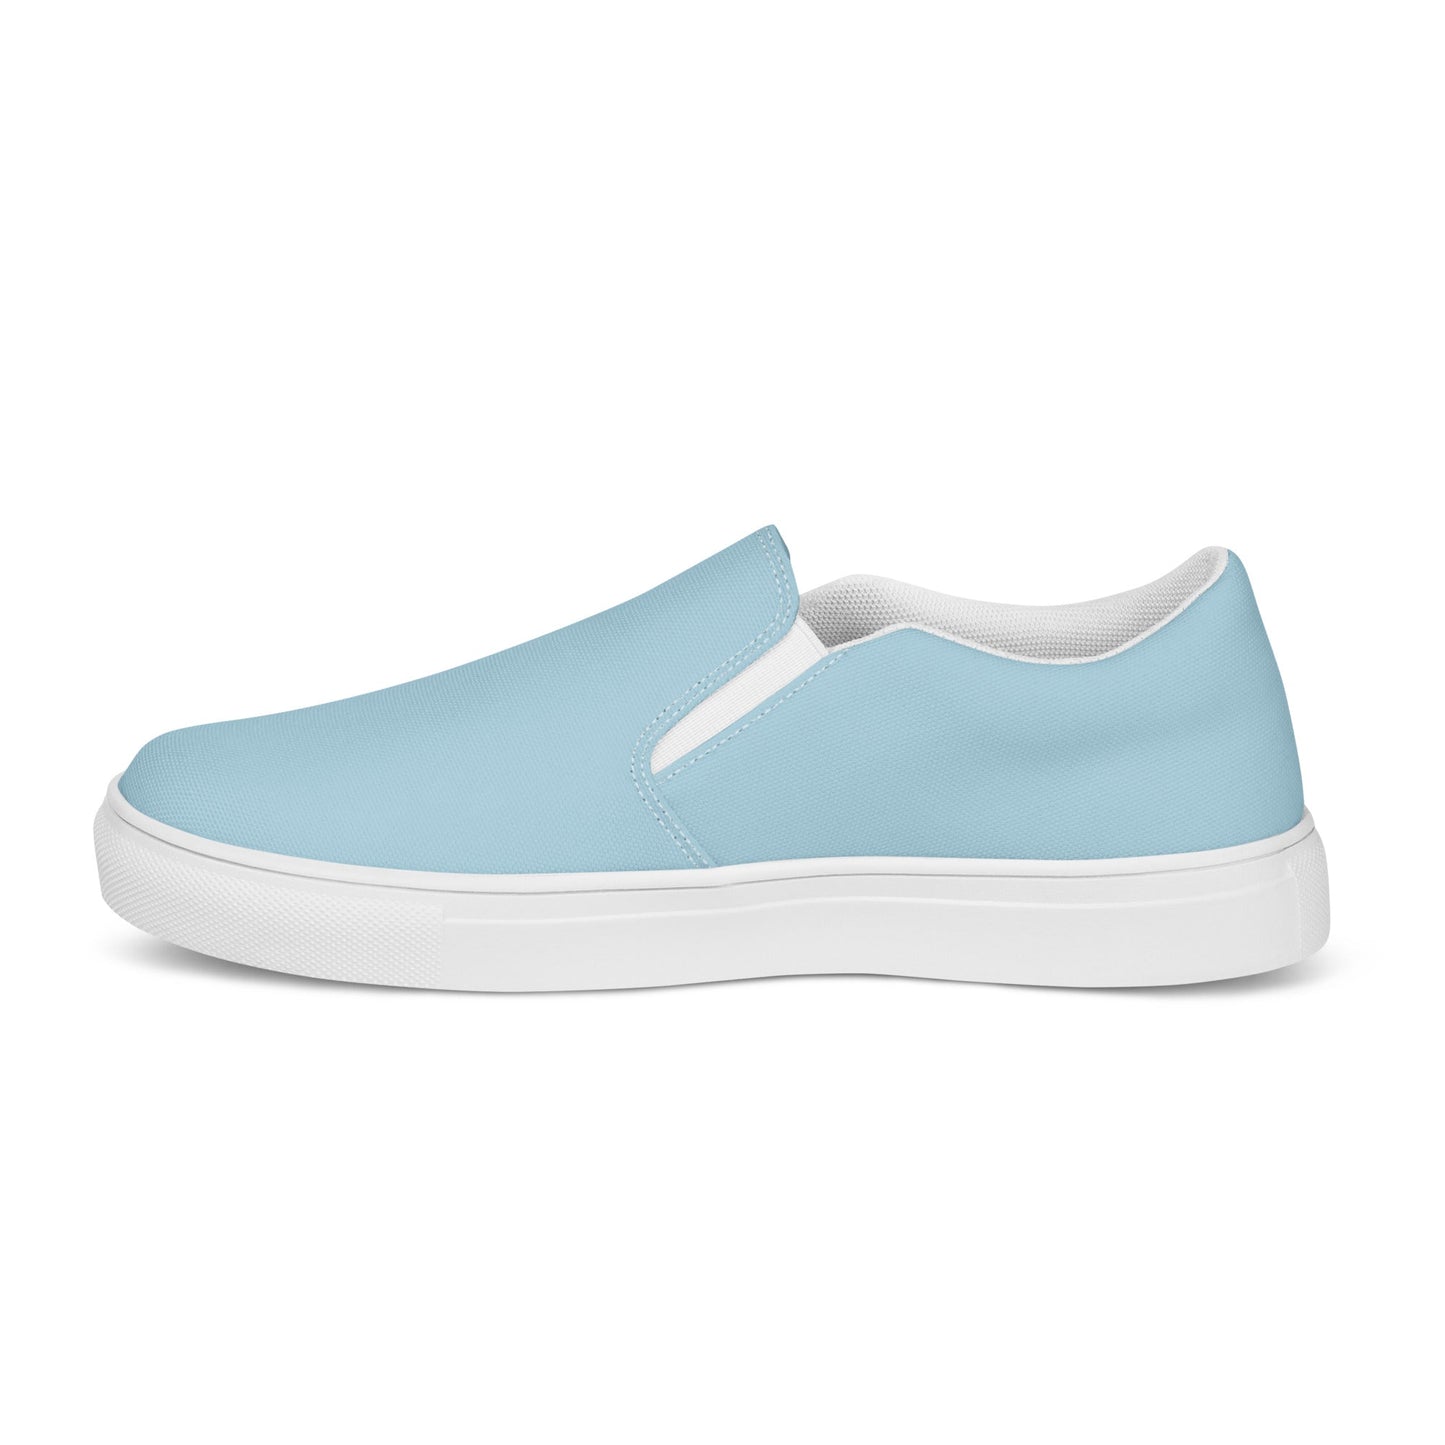 klasneakers Men’s slip-on canvas shoes - Sky Blue